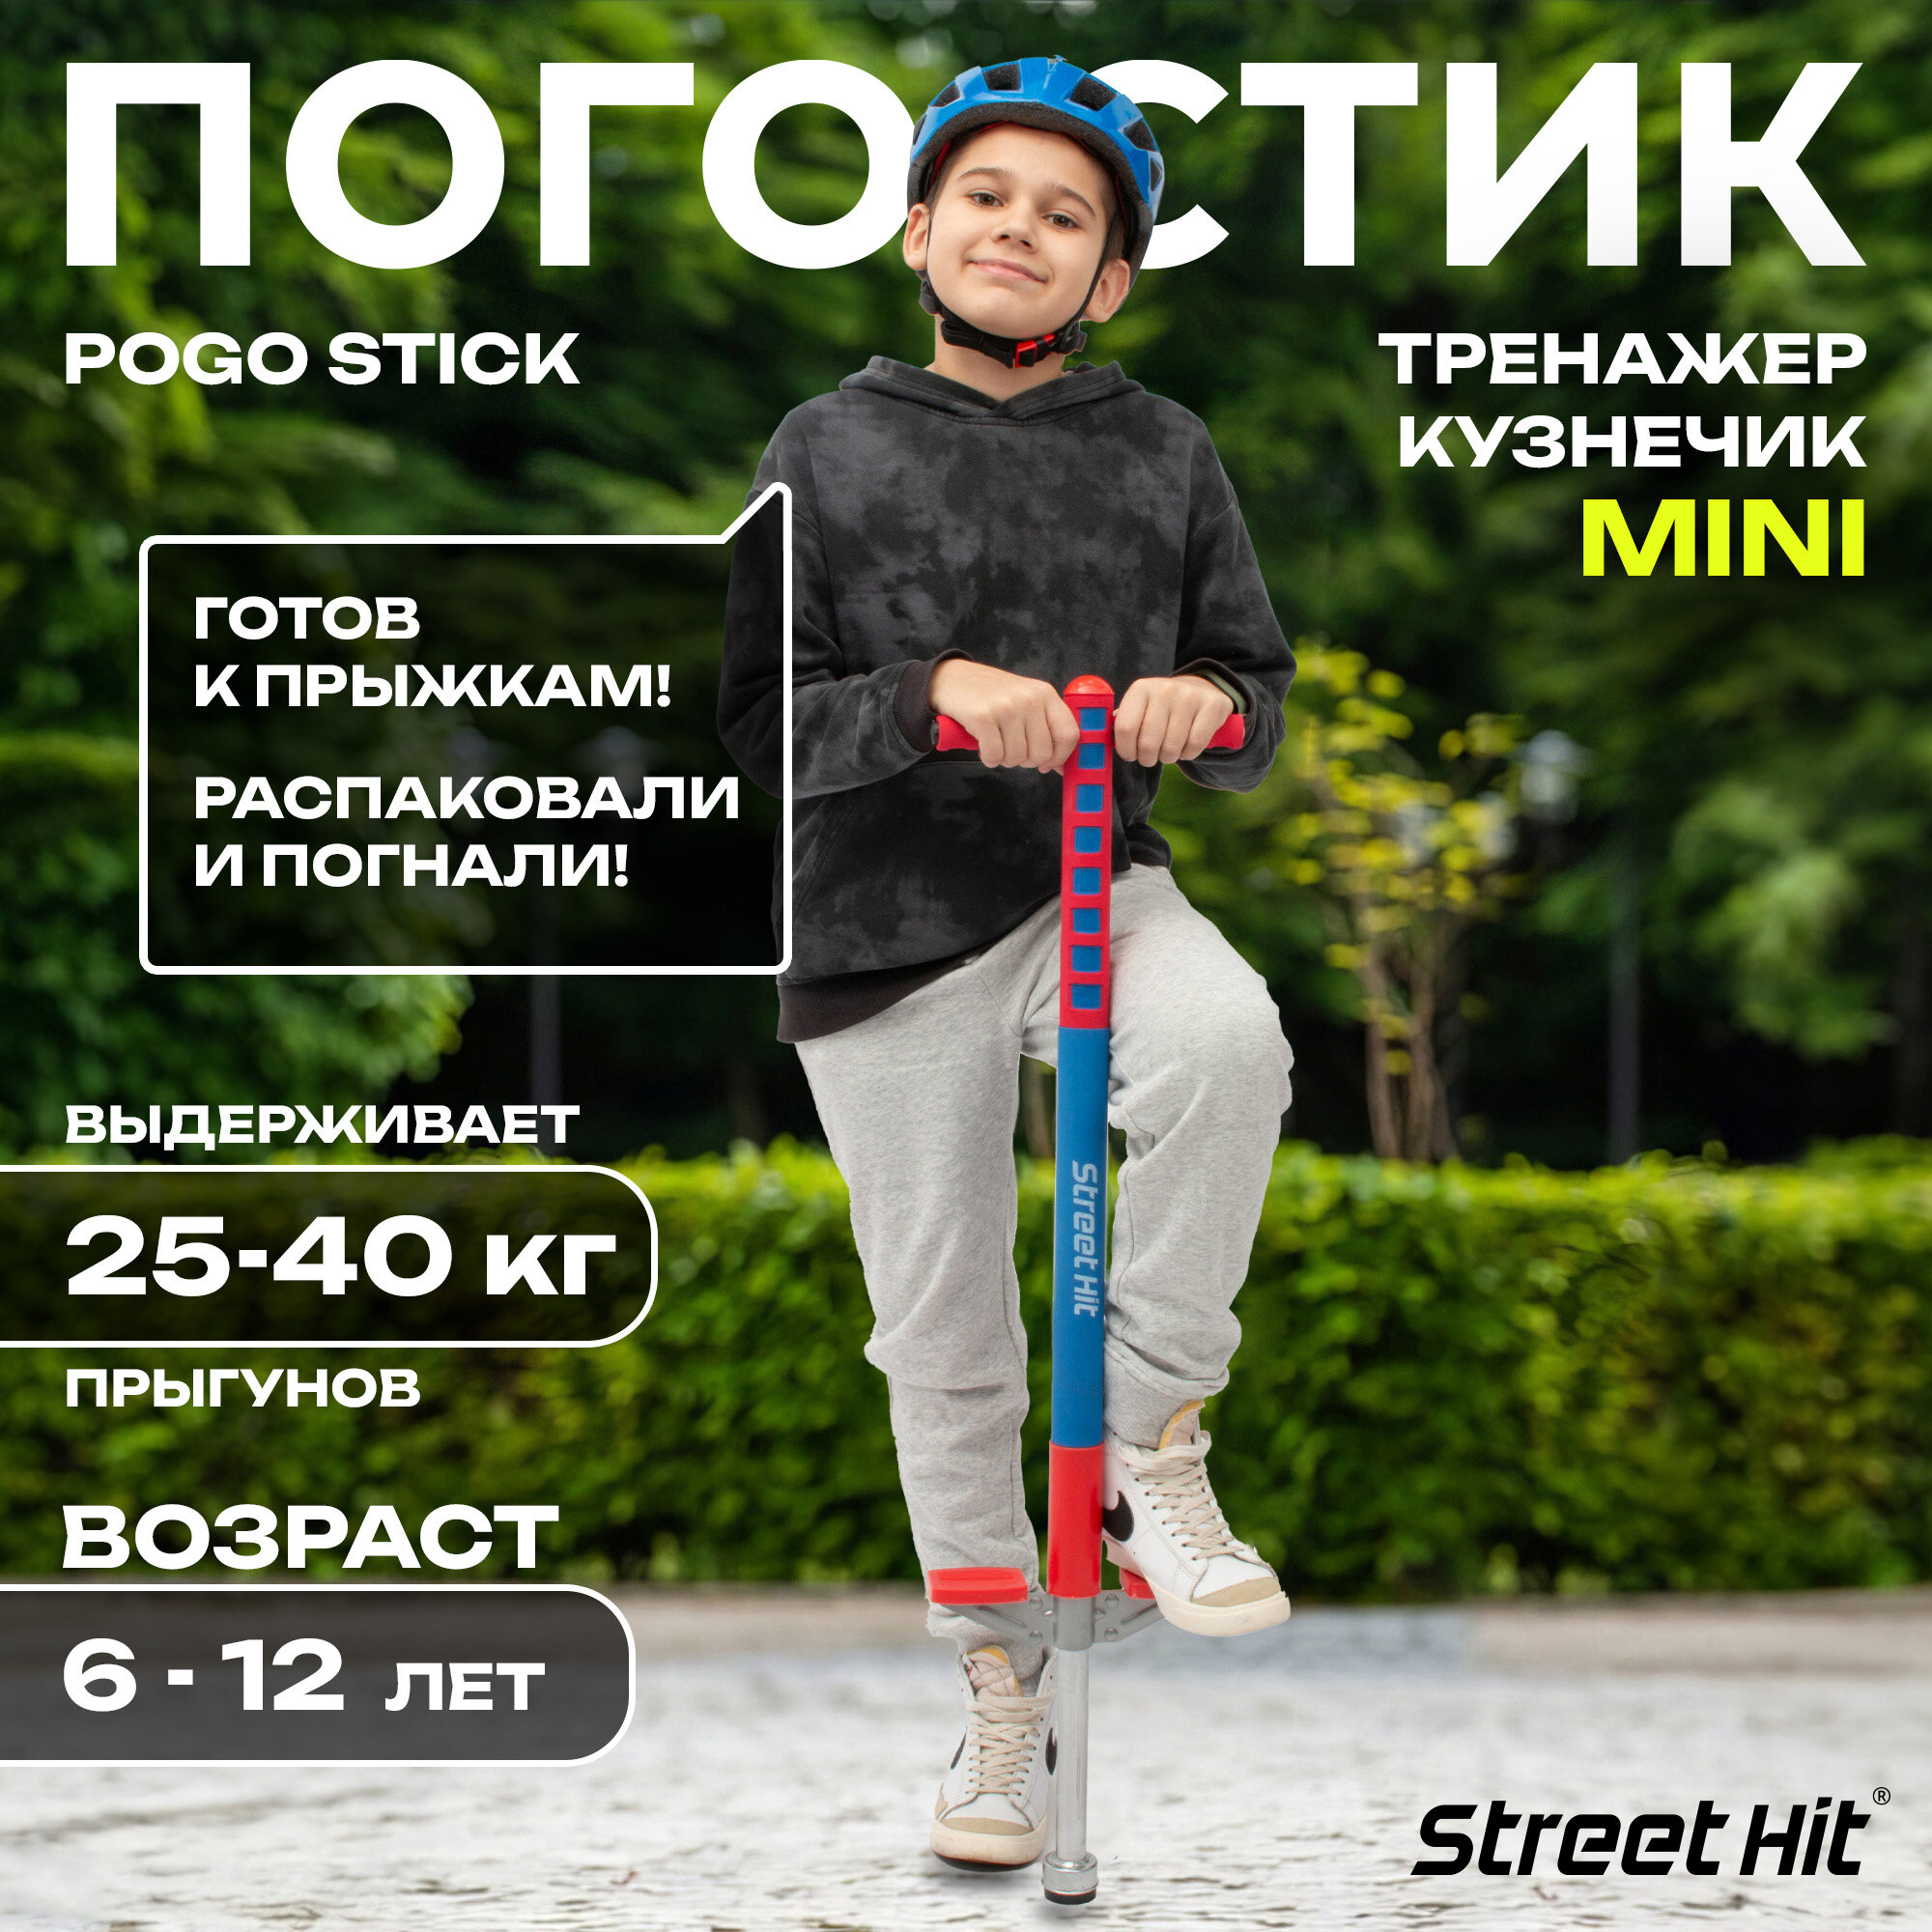 Тренажер-кузнечик Street Hit Pogo Stick Mini, до 40 кг, красный/синий